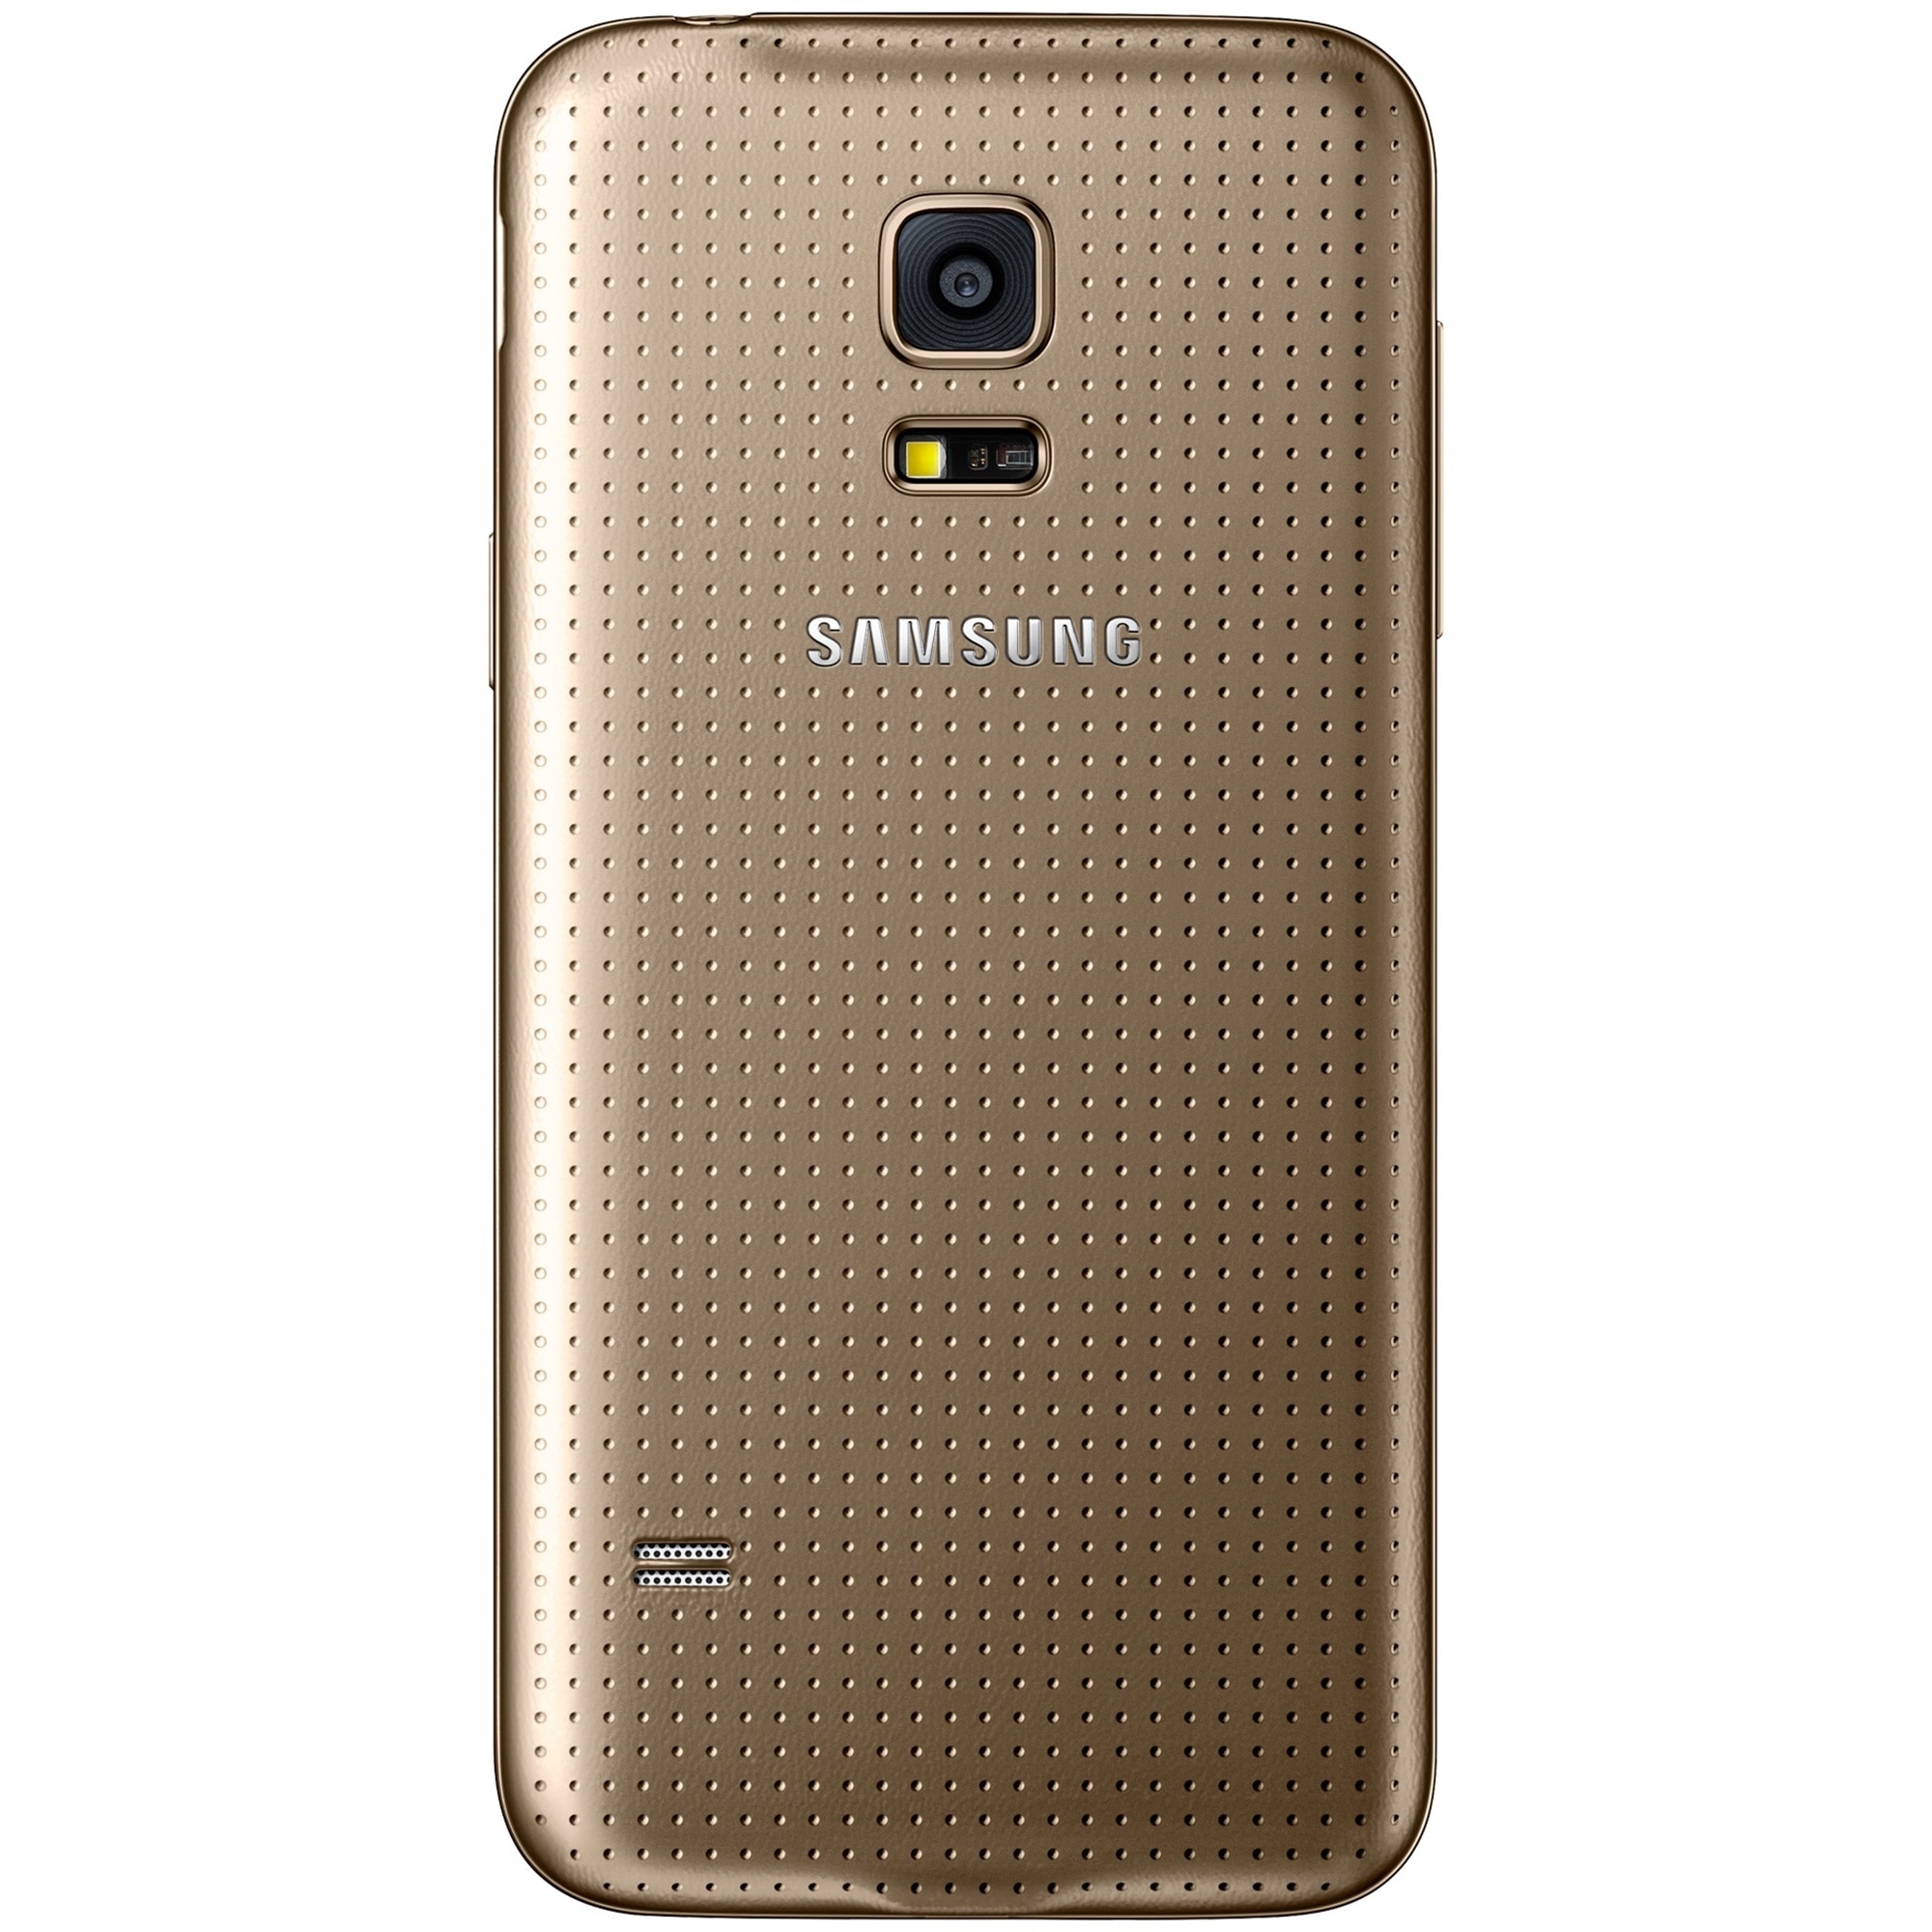 Samsung galaxy gold 3. Самсунг SM-g800h/DS. Samsung s5 Mini. Samsung s5 Mini Duos. Samsung Galaxy s5 Mini Duos.